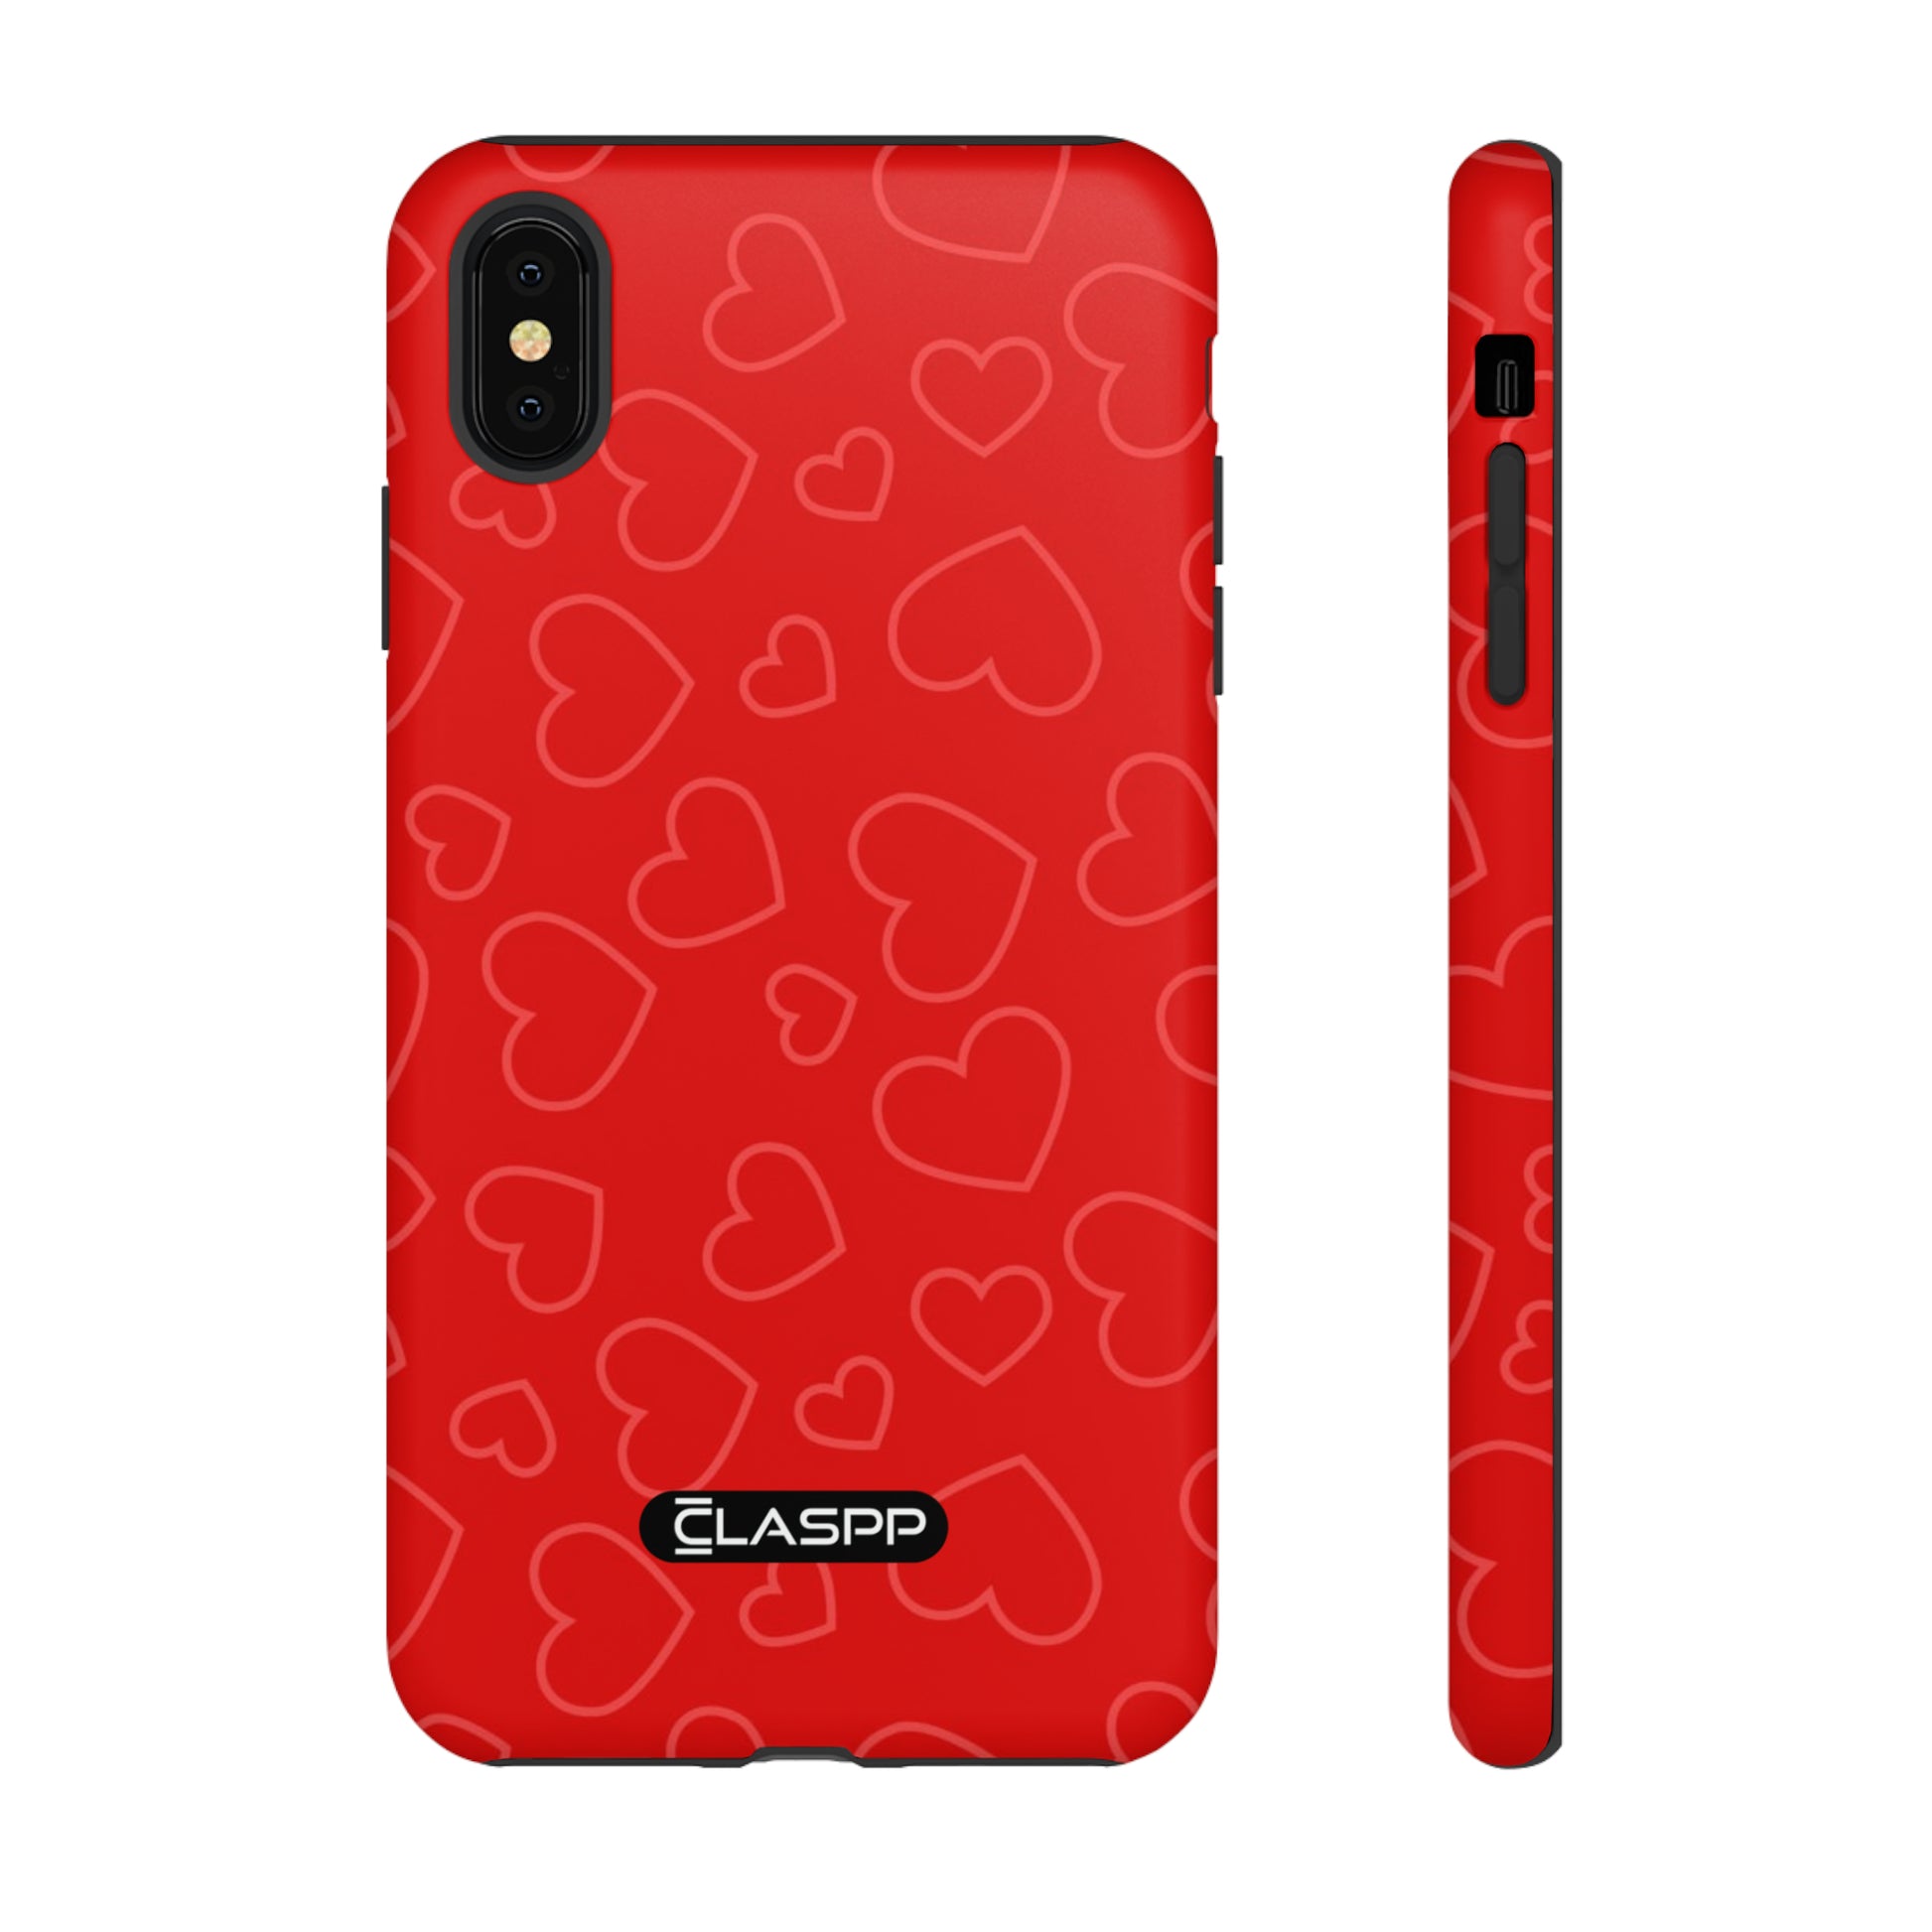 Iphone XS max Valentine's Day phone case